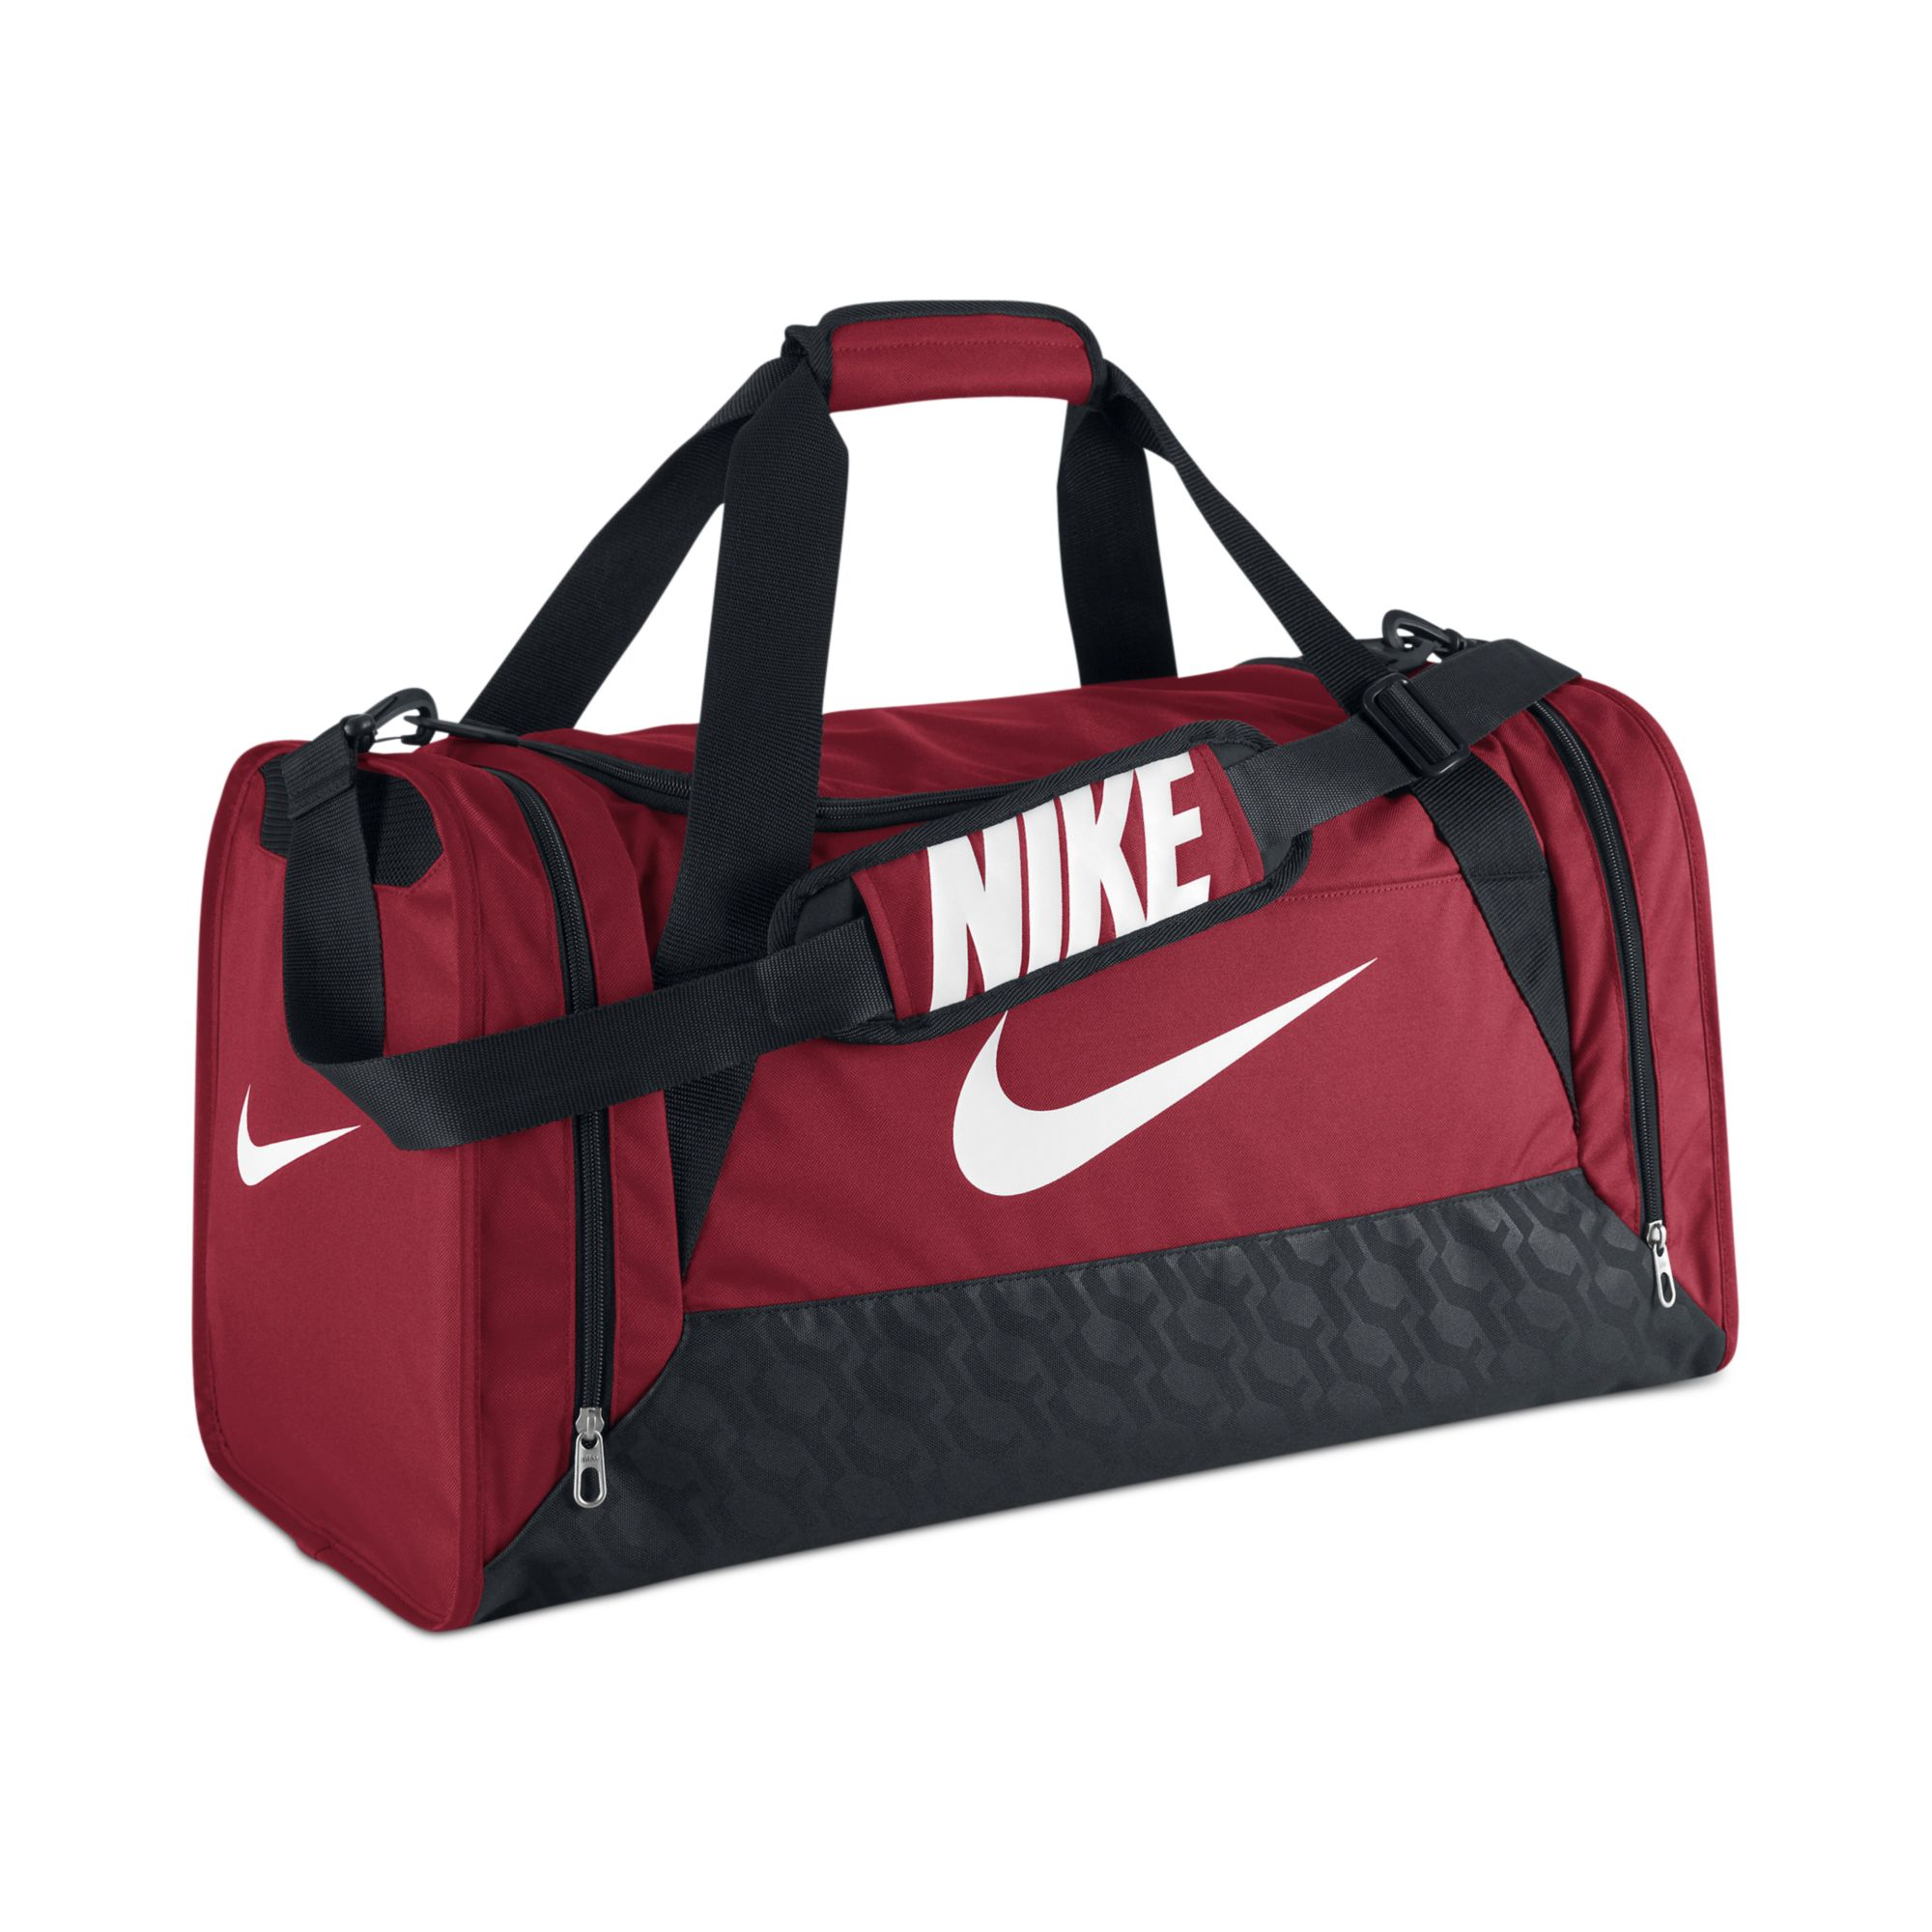 Nike Duffle Bag Sale | City of Kenmore 